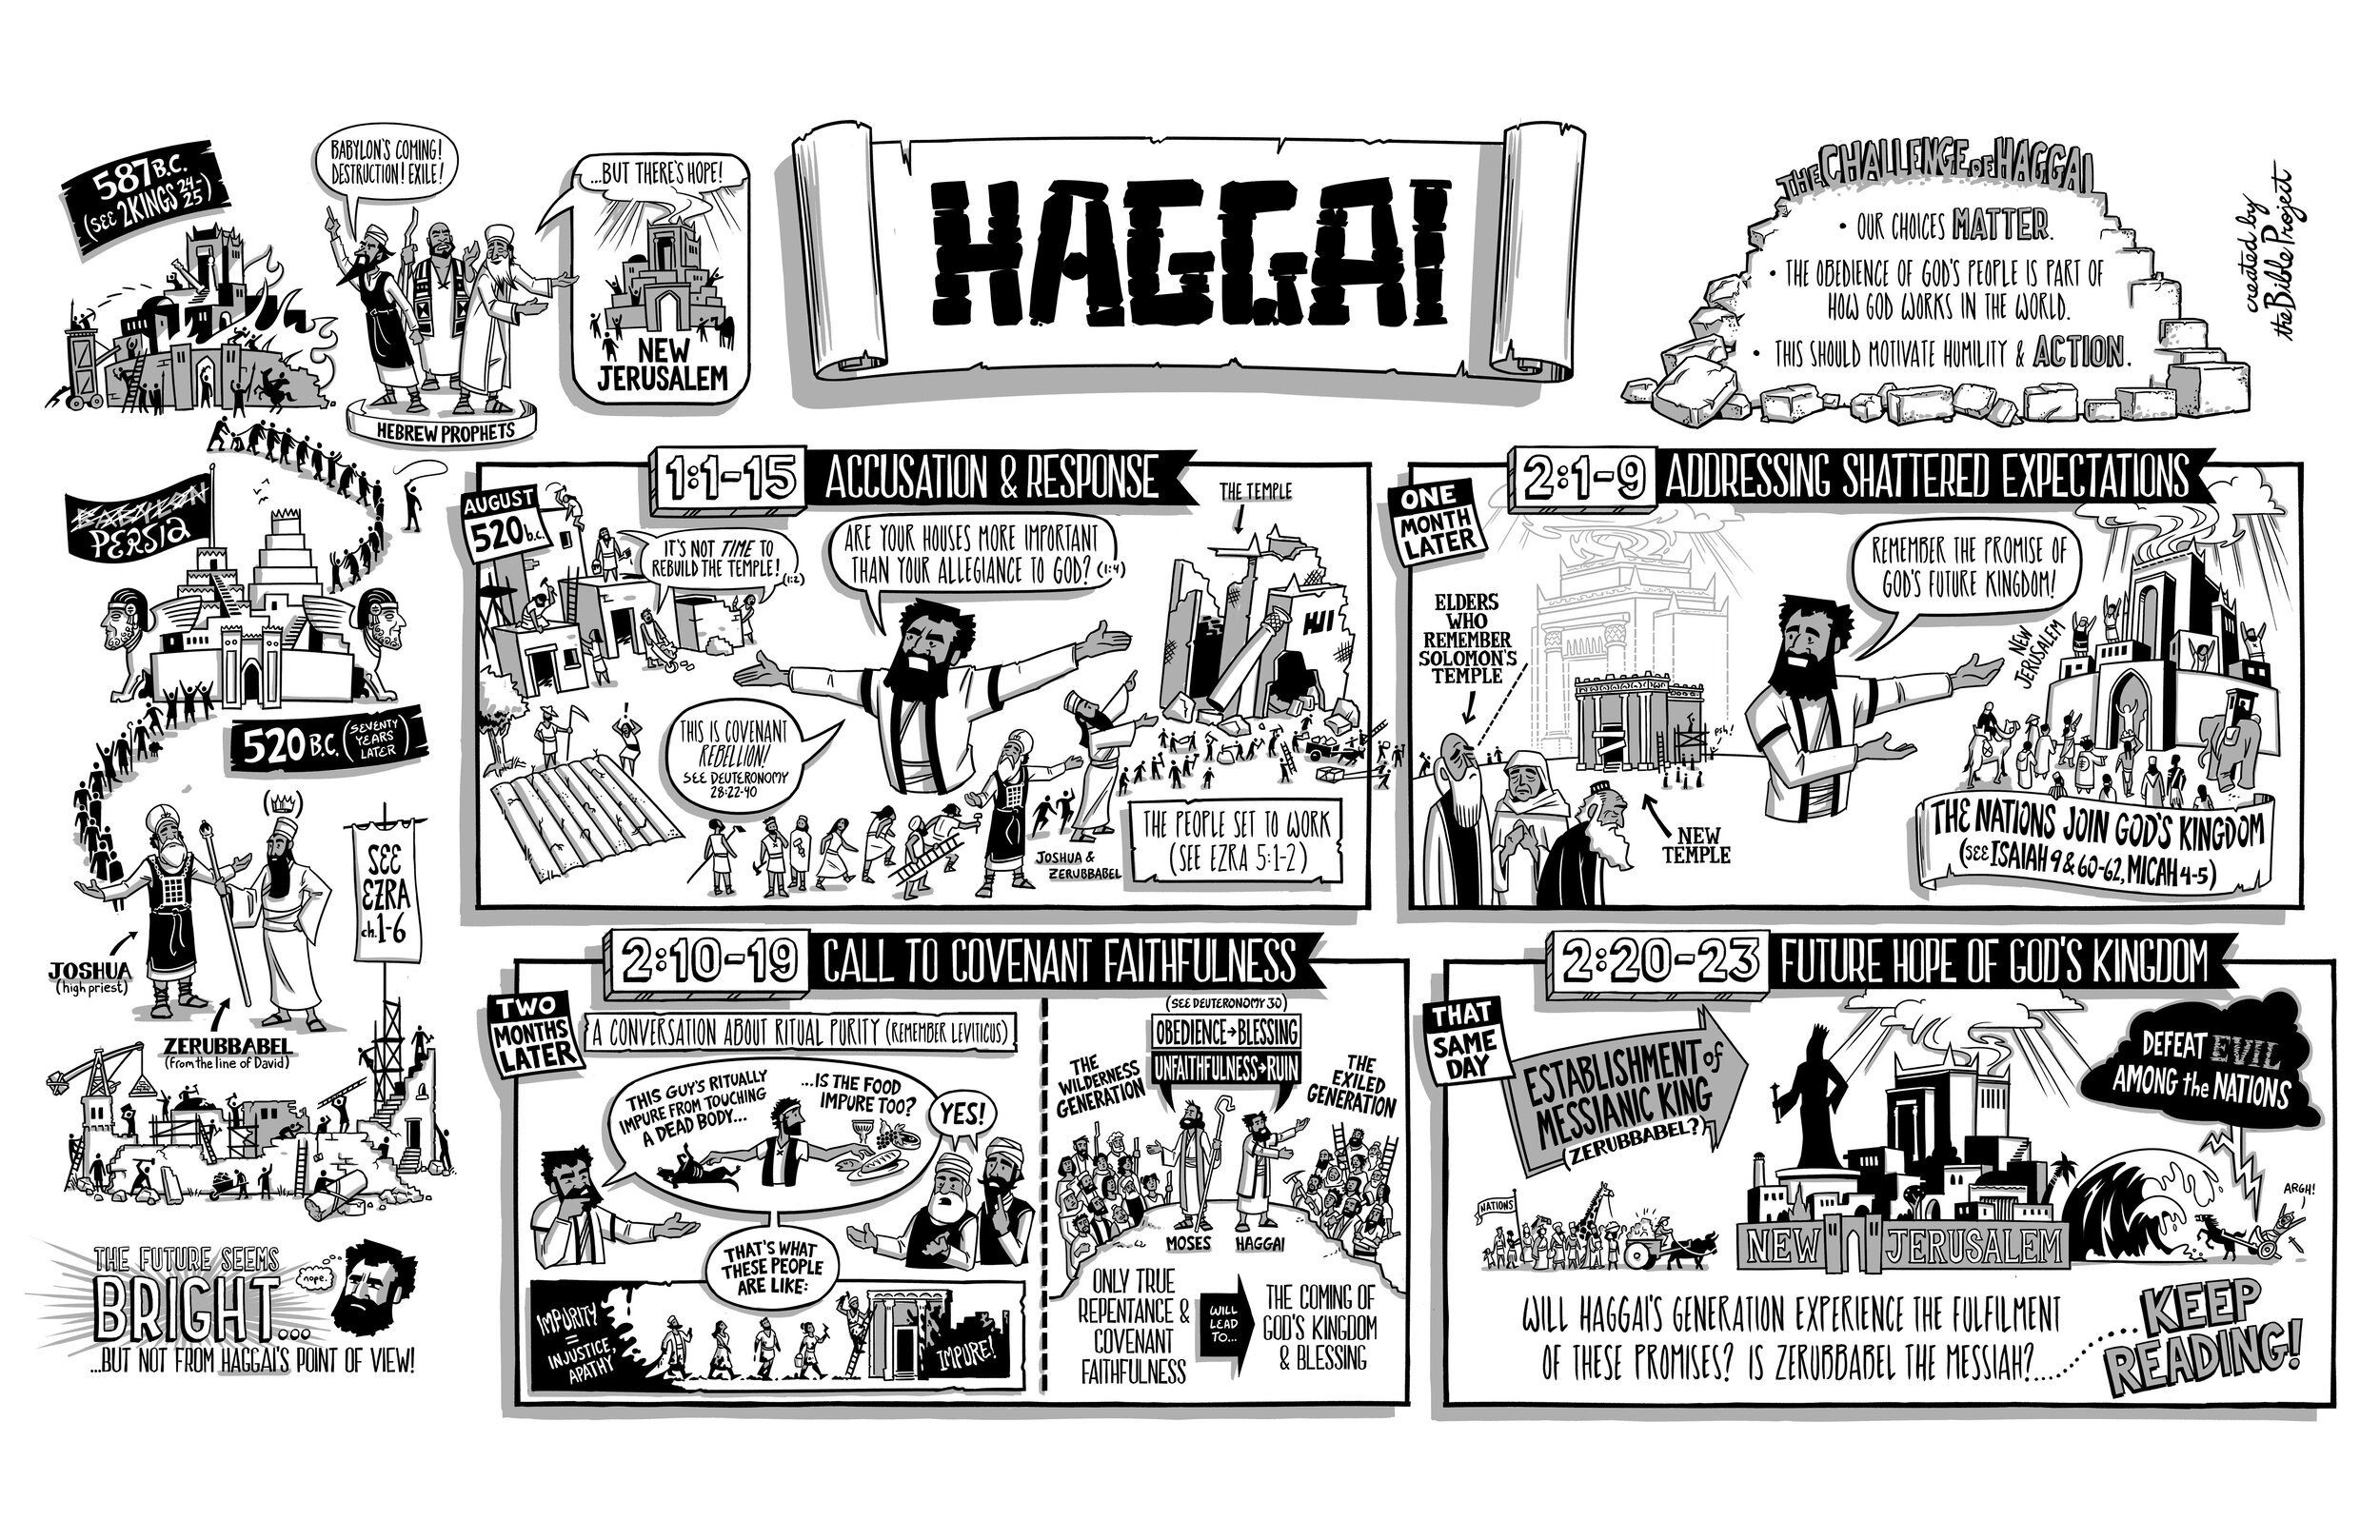 BibleProject: Haggai (Video)